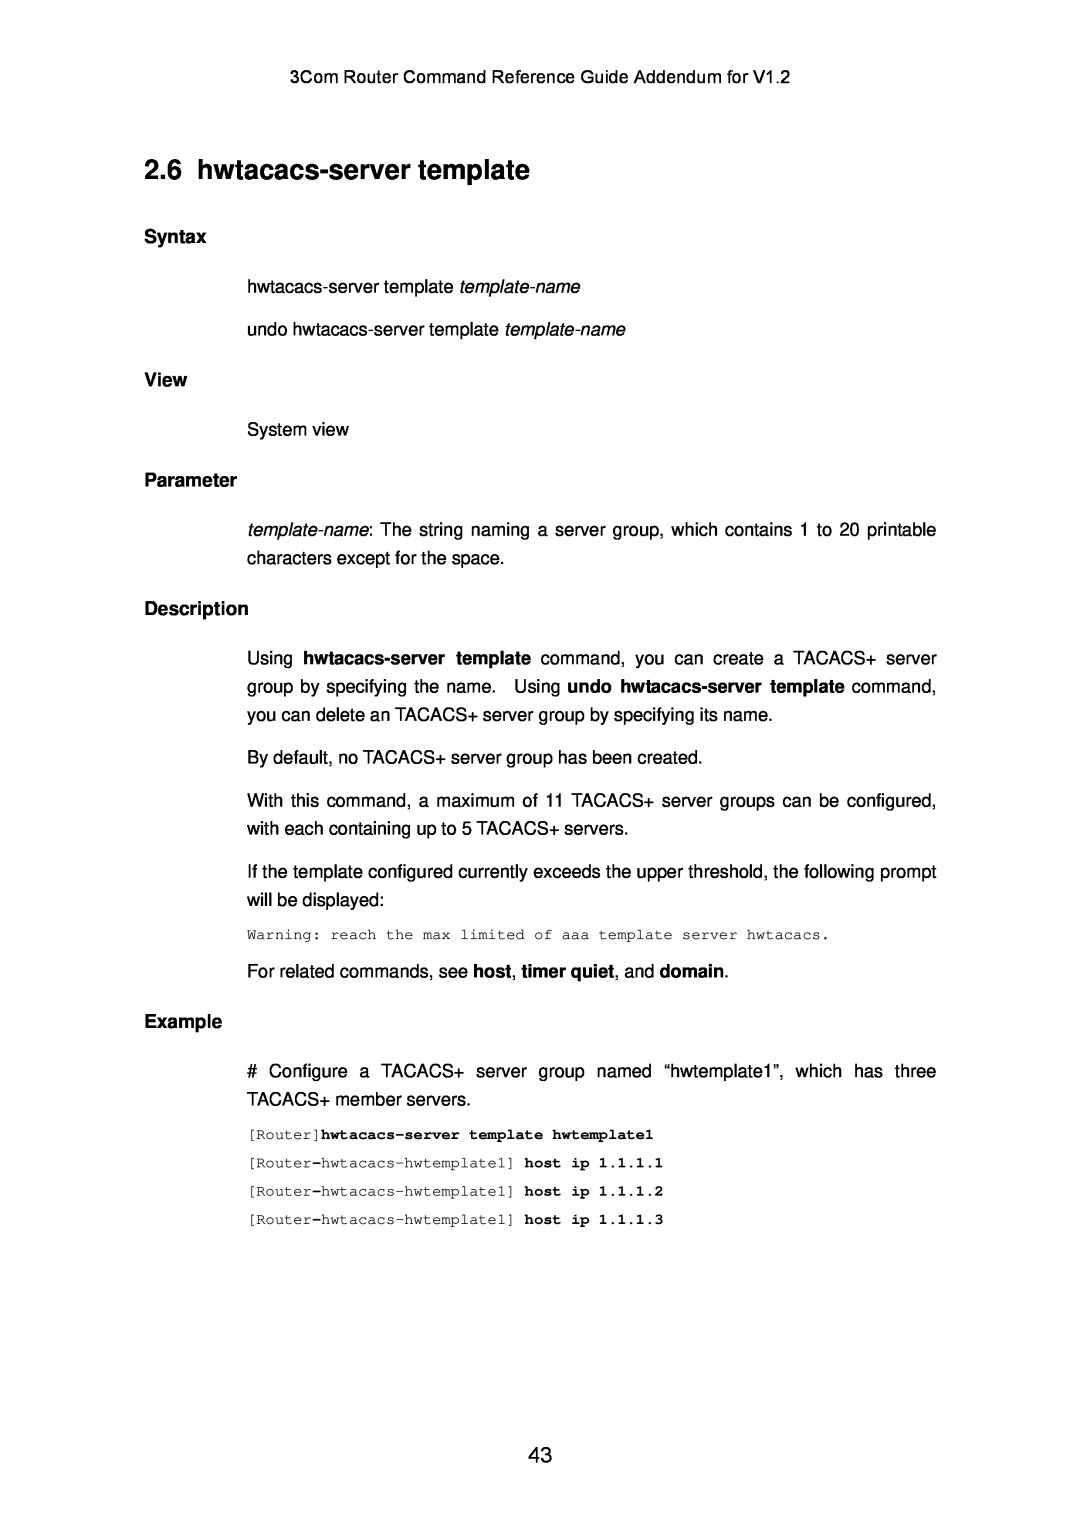 3Com 10014302 manual hwtacacs-server template, Syntax, View, Parameter, Description, Example 